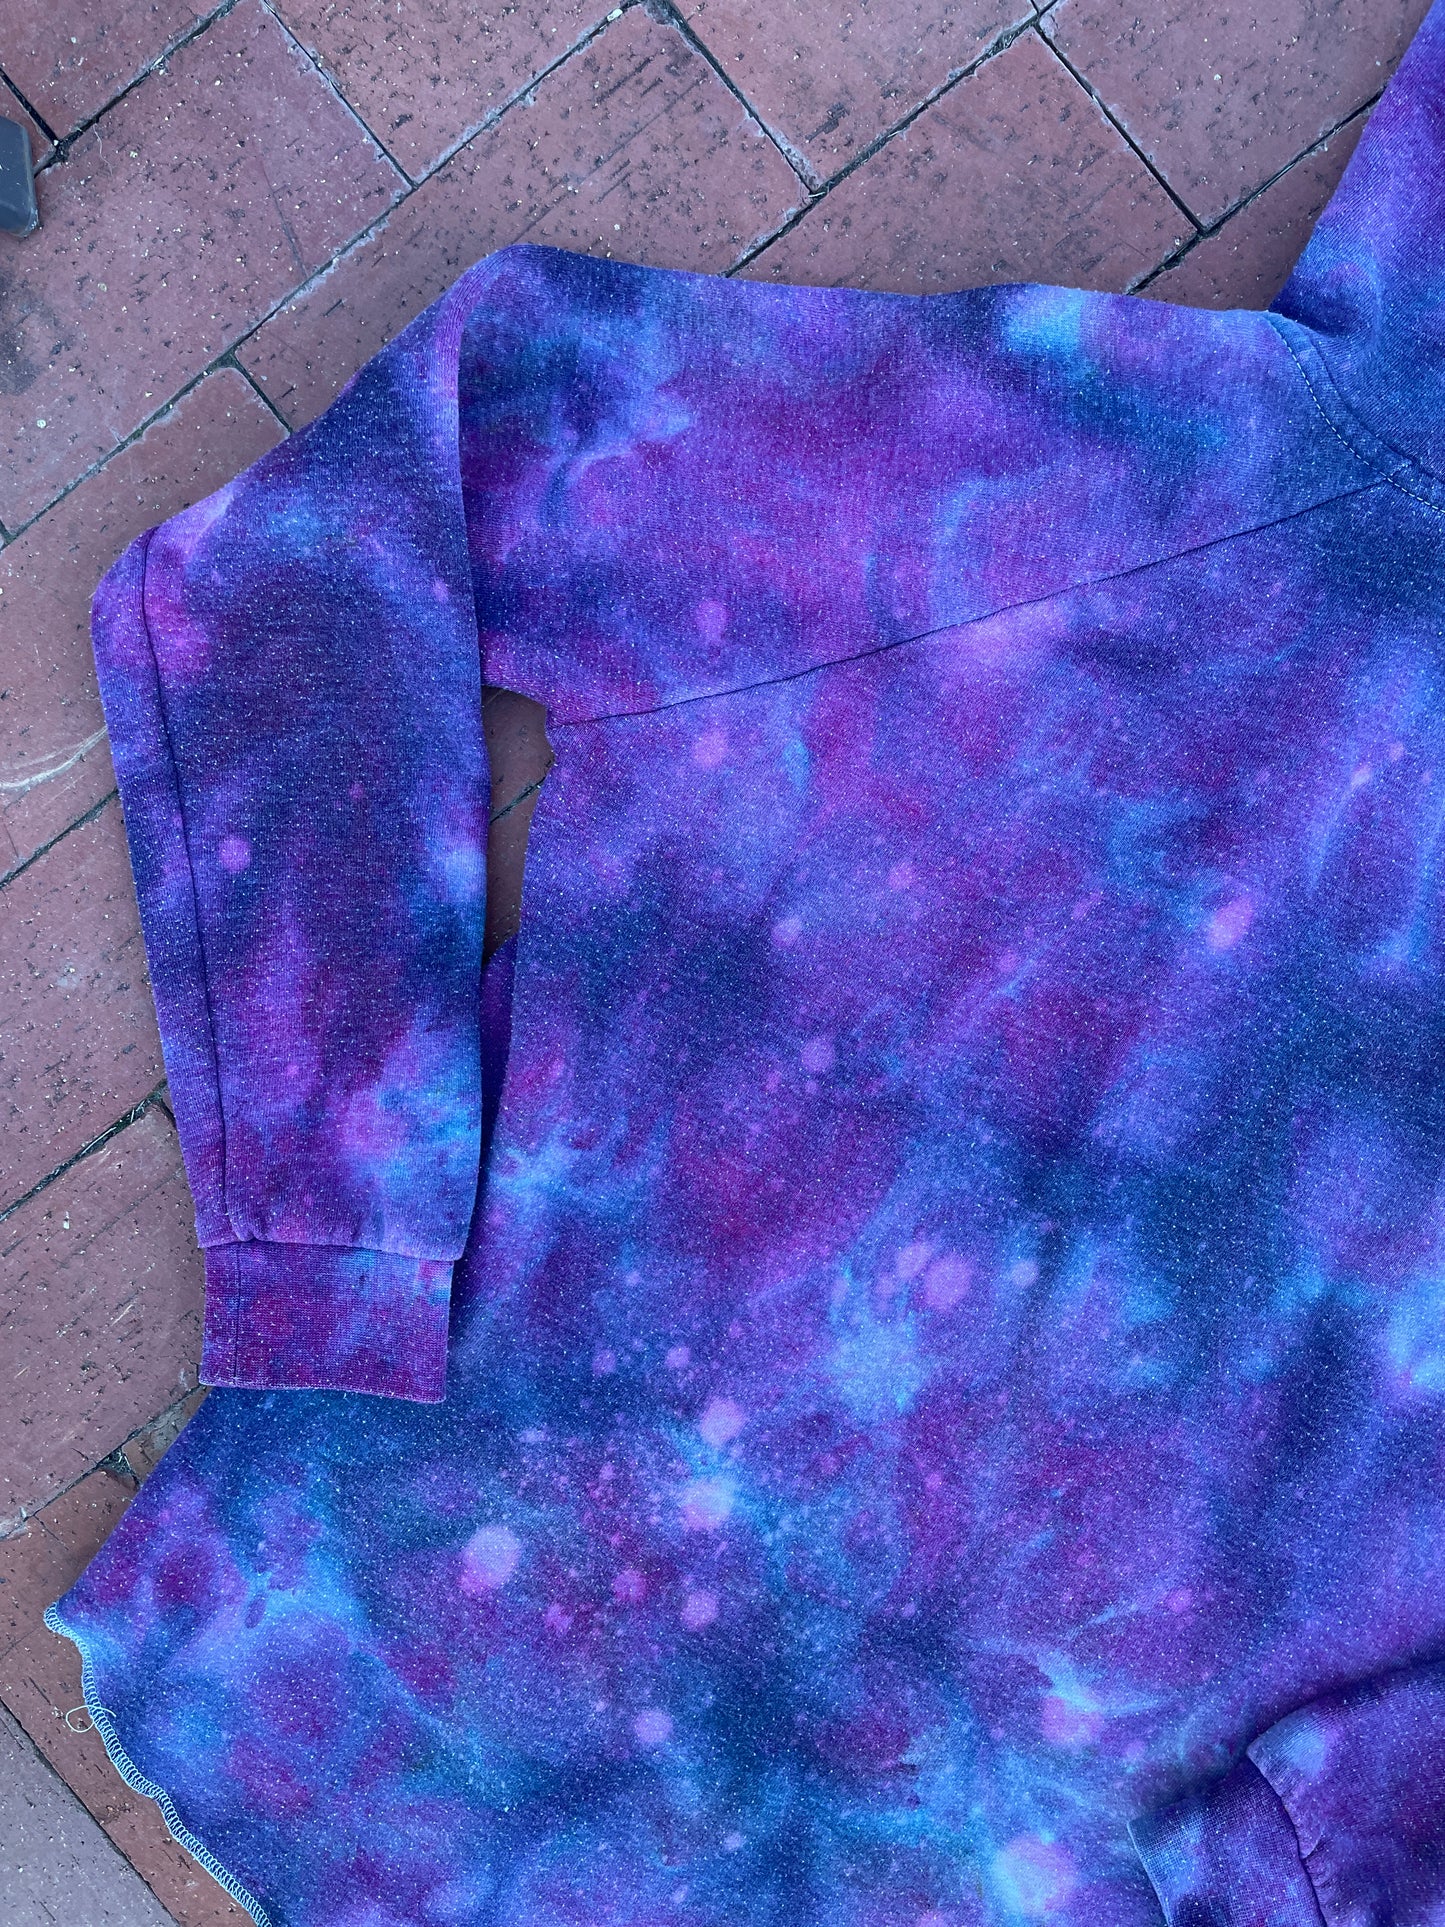 Large Women's Hand-Printed Alien Handmade Galaxy Tie Dye Hoodie | Handmade One-Of-a-Kind Upcycled Purple and Blue Sweatshirt